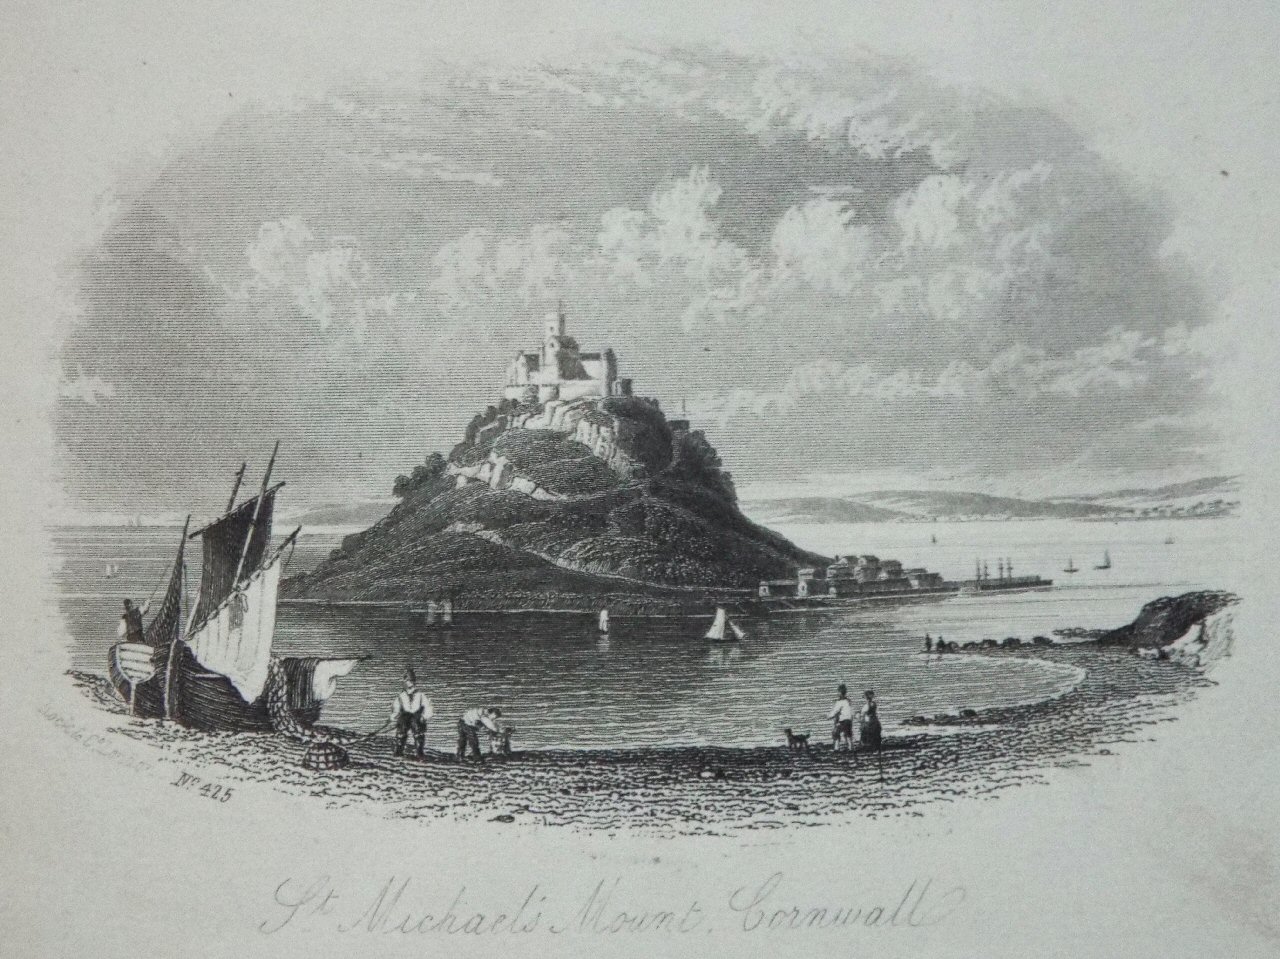 Steel Vignette - St. Michael's Mount, Cornwall - Rock